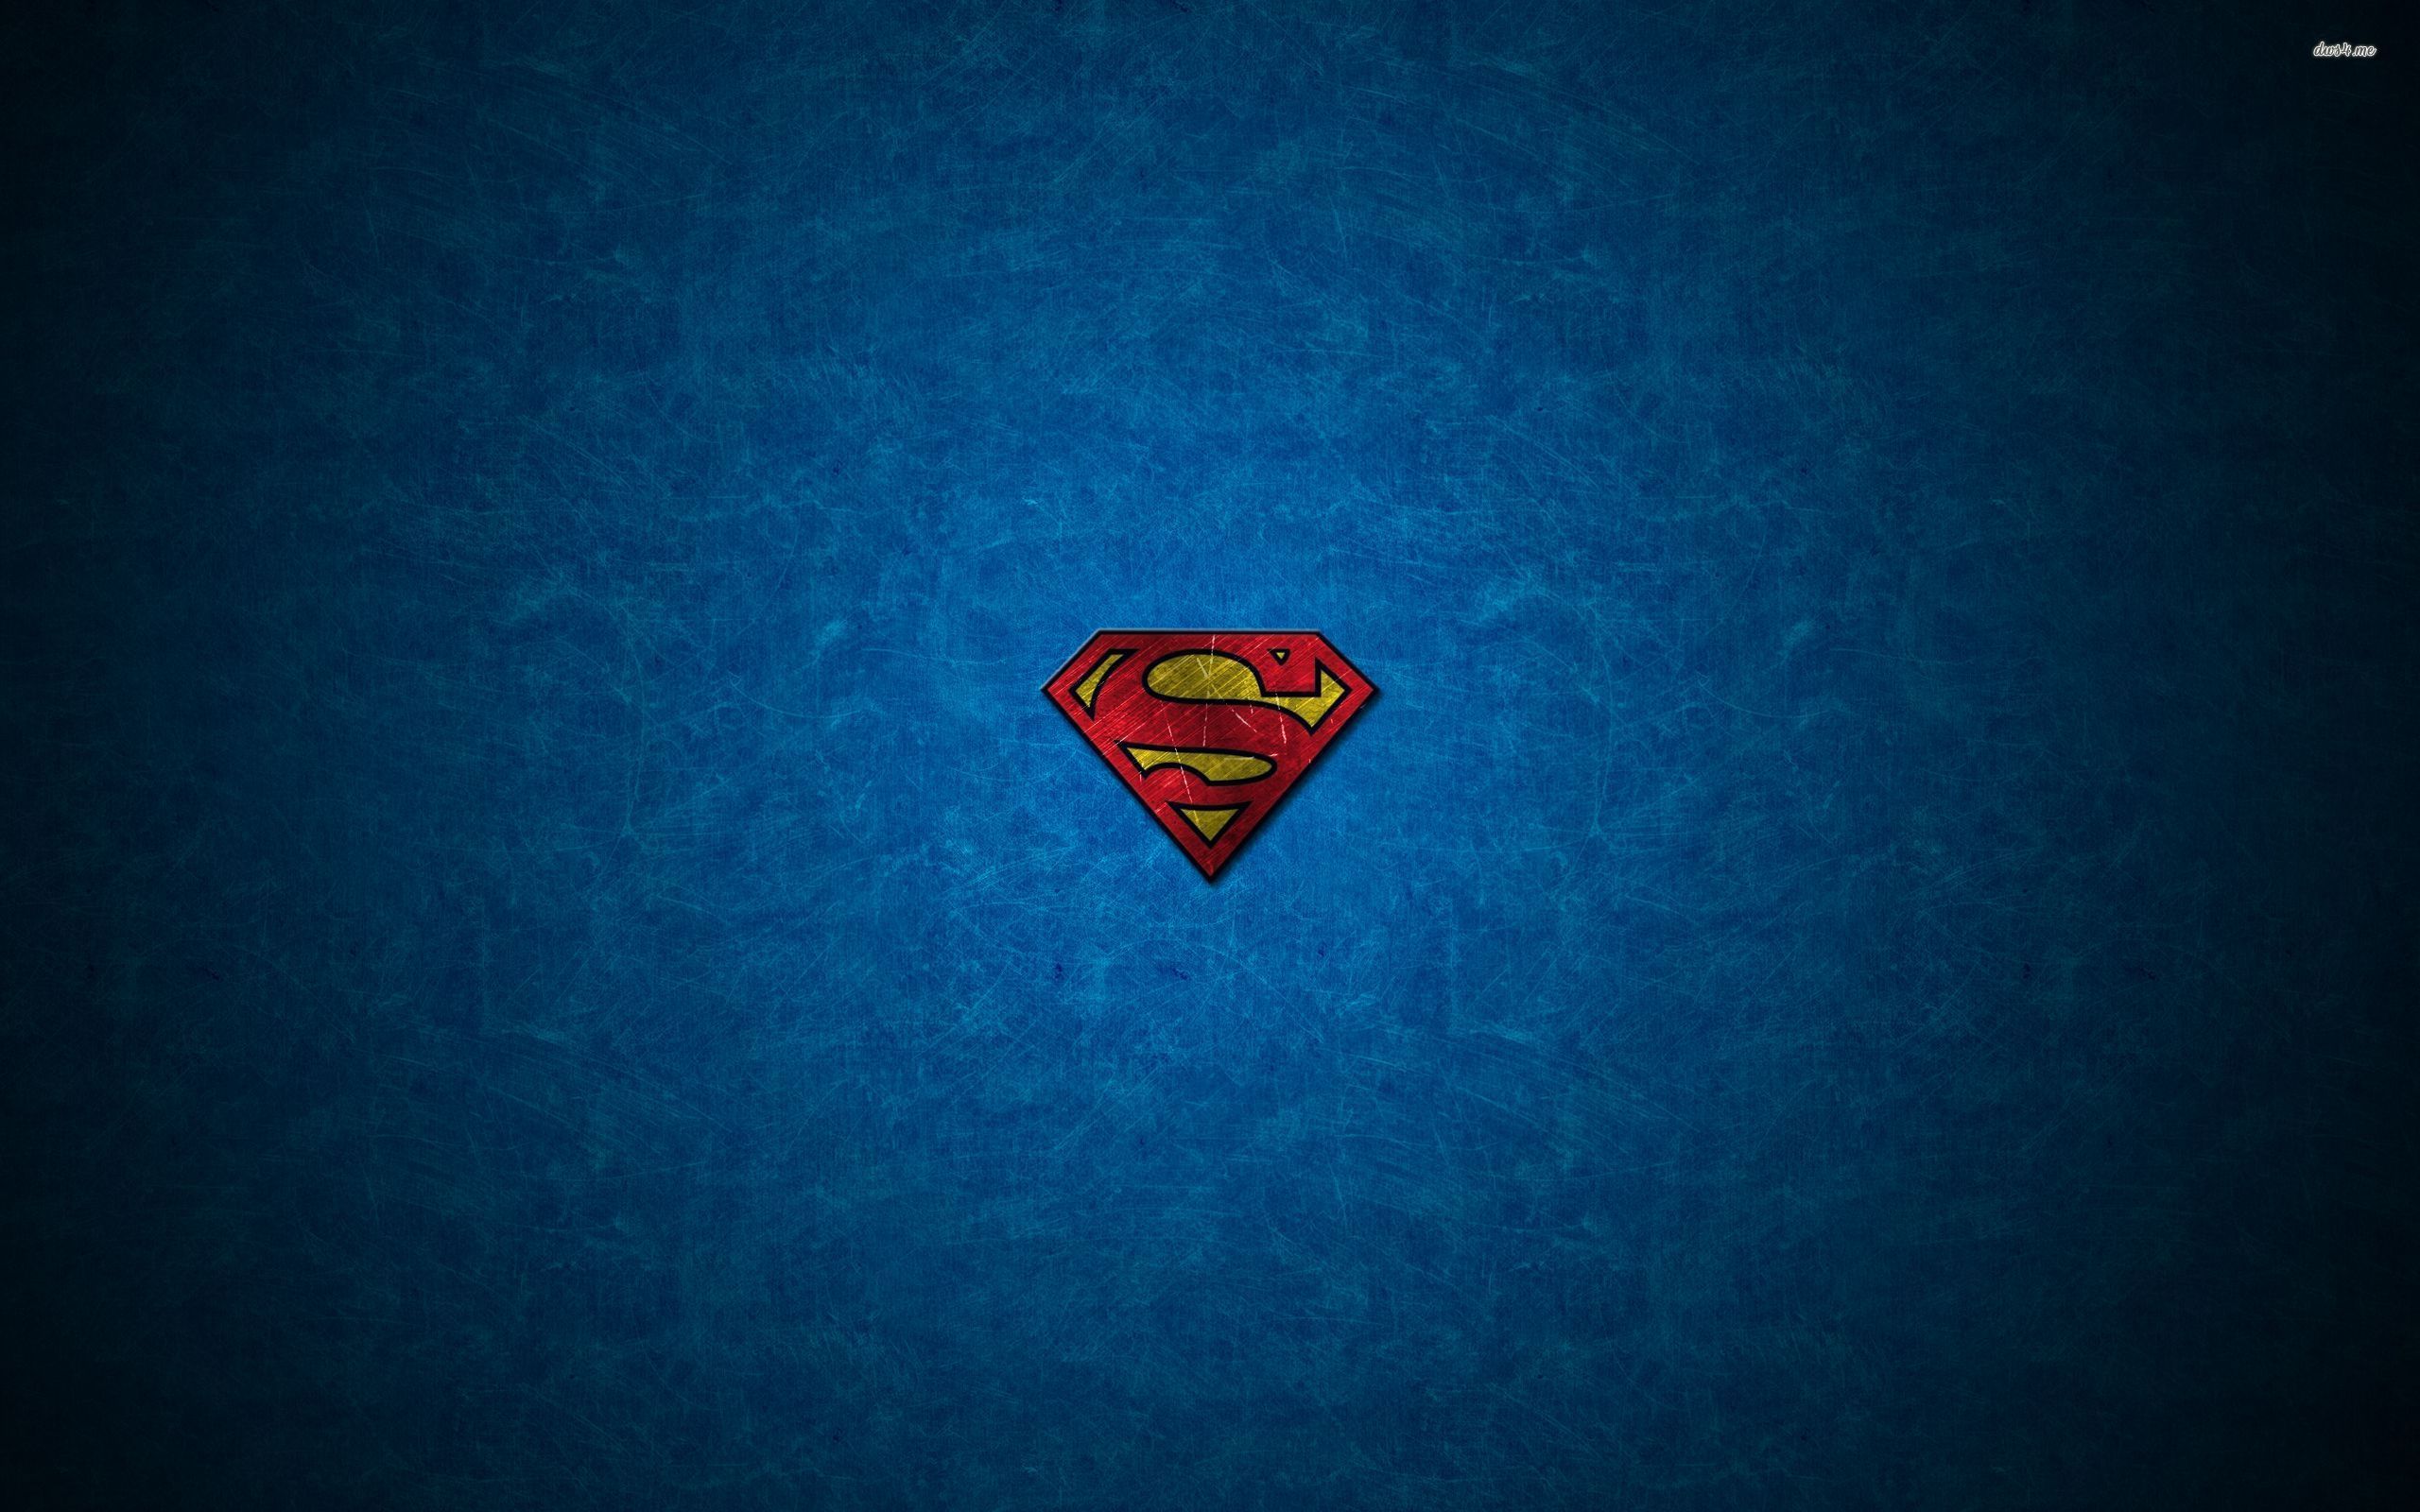 Superman logo wallpaper - Digital Art wallpapers -